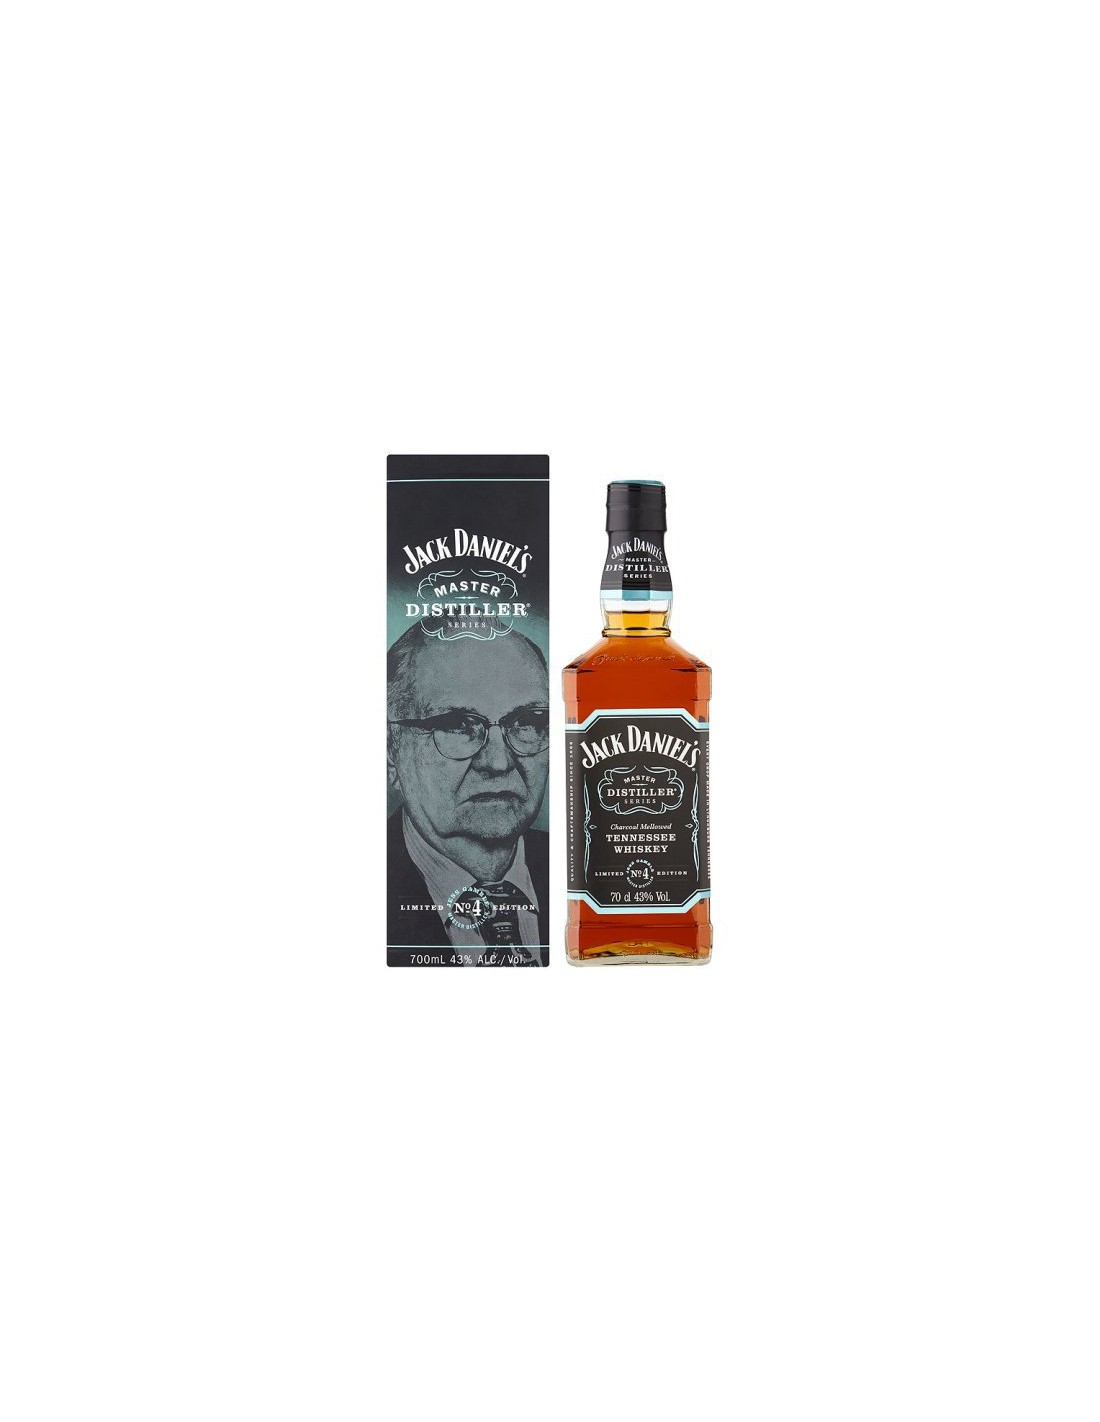 Whisky Jack Daniel’s Master Distiller No. 4 0.7L, 43% alc., SUA alcooldiscount.ro